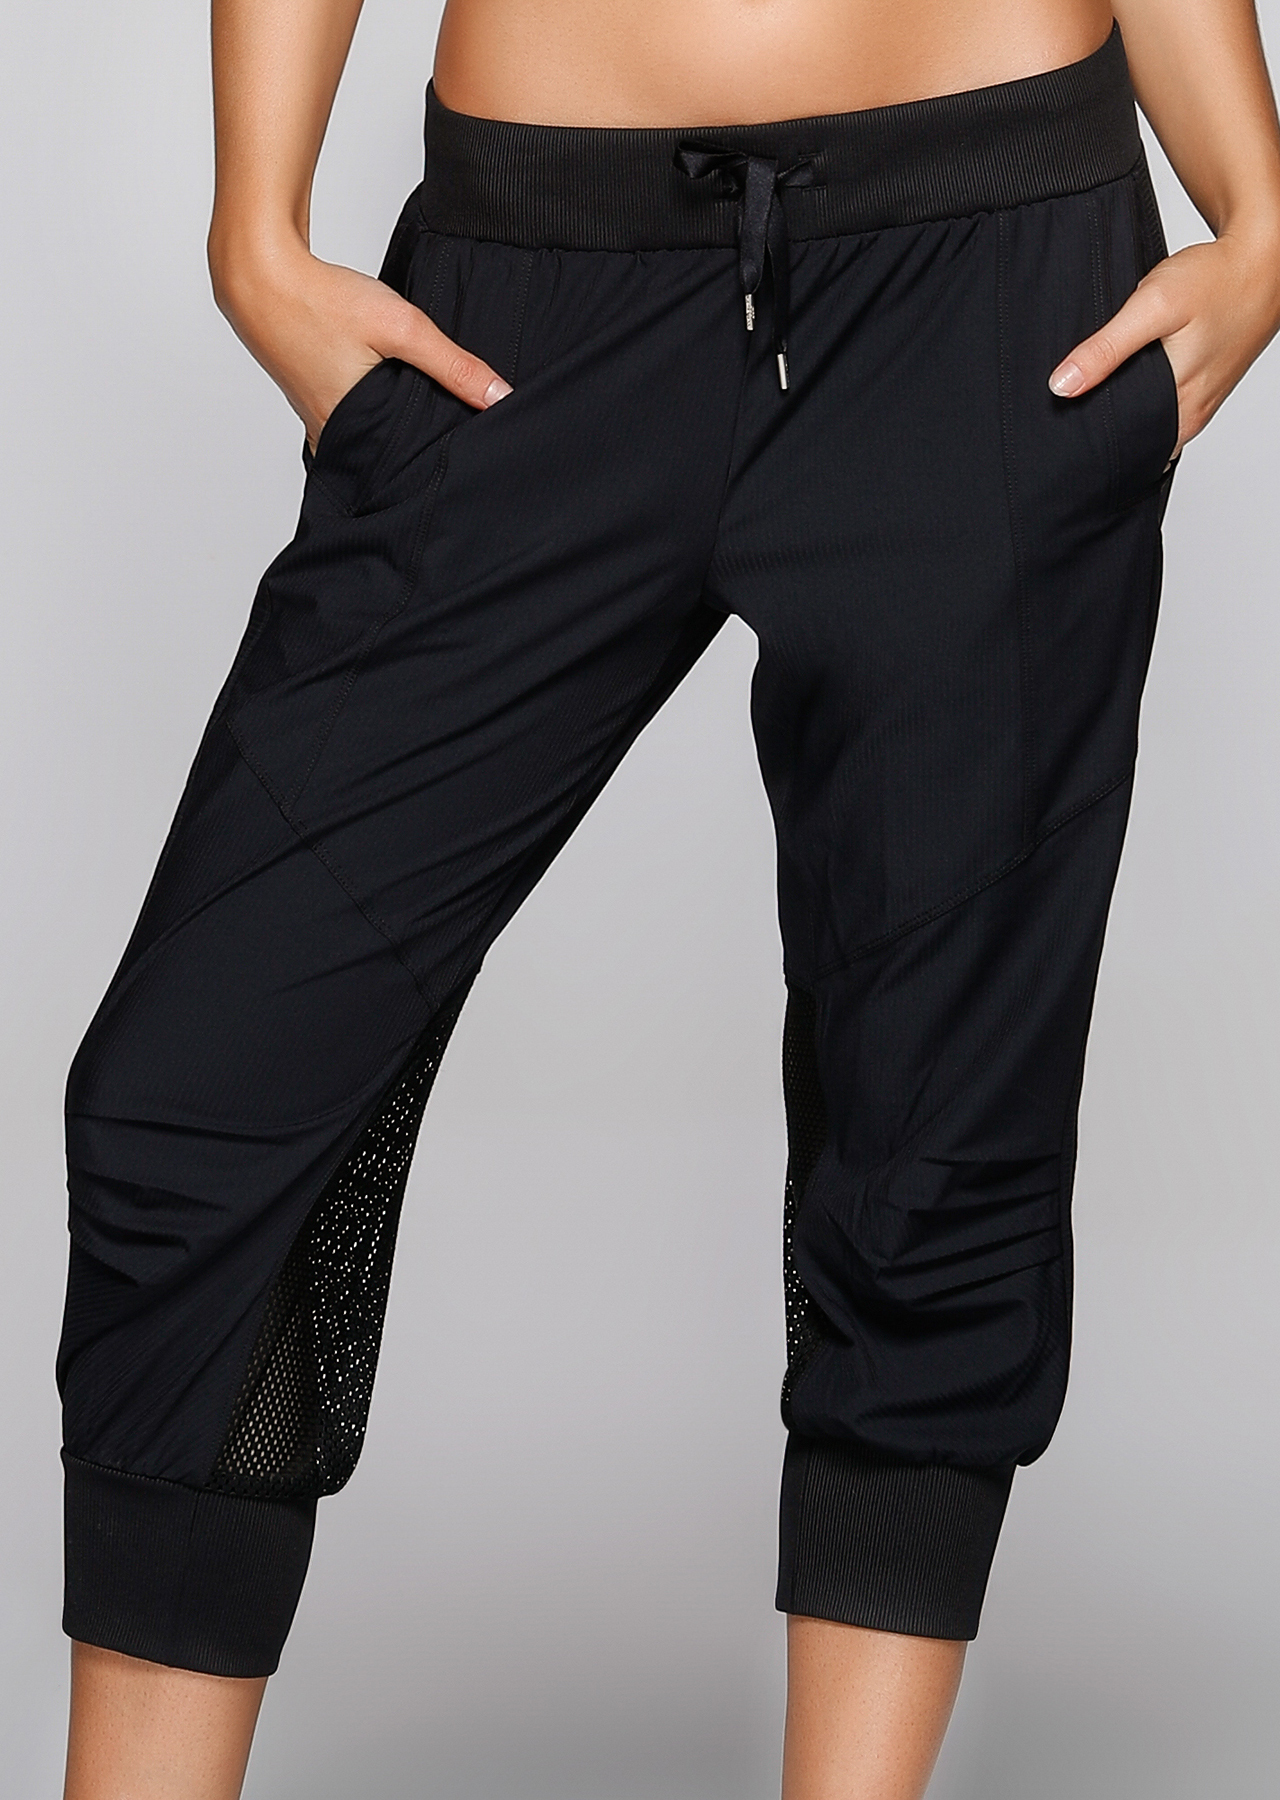 Buy Tokyo 34 Pants  Black Betty Basics for Sale Online New Zealand   White  Co